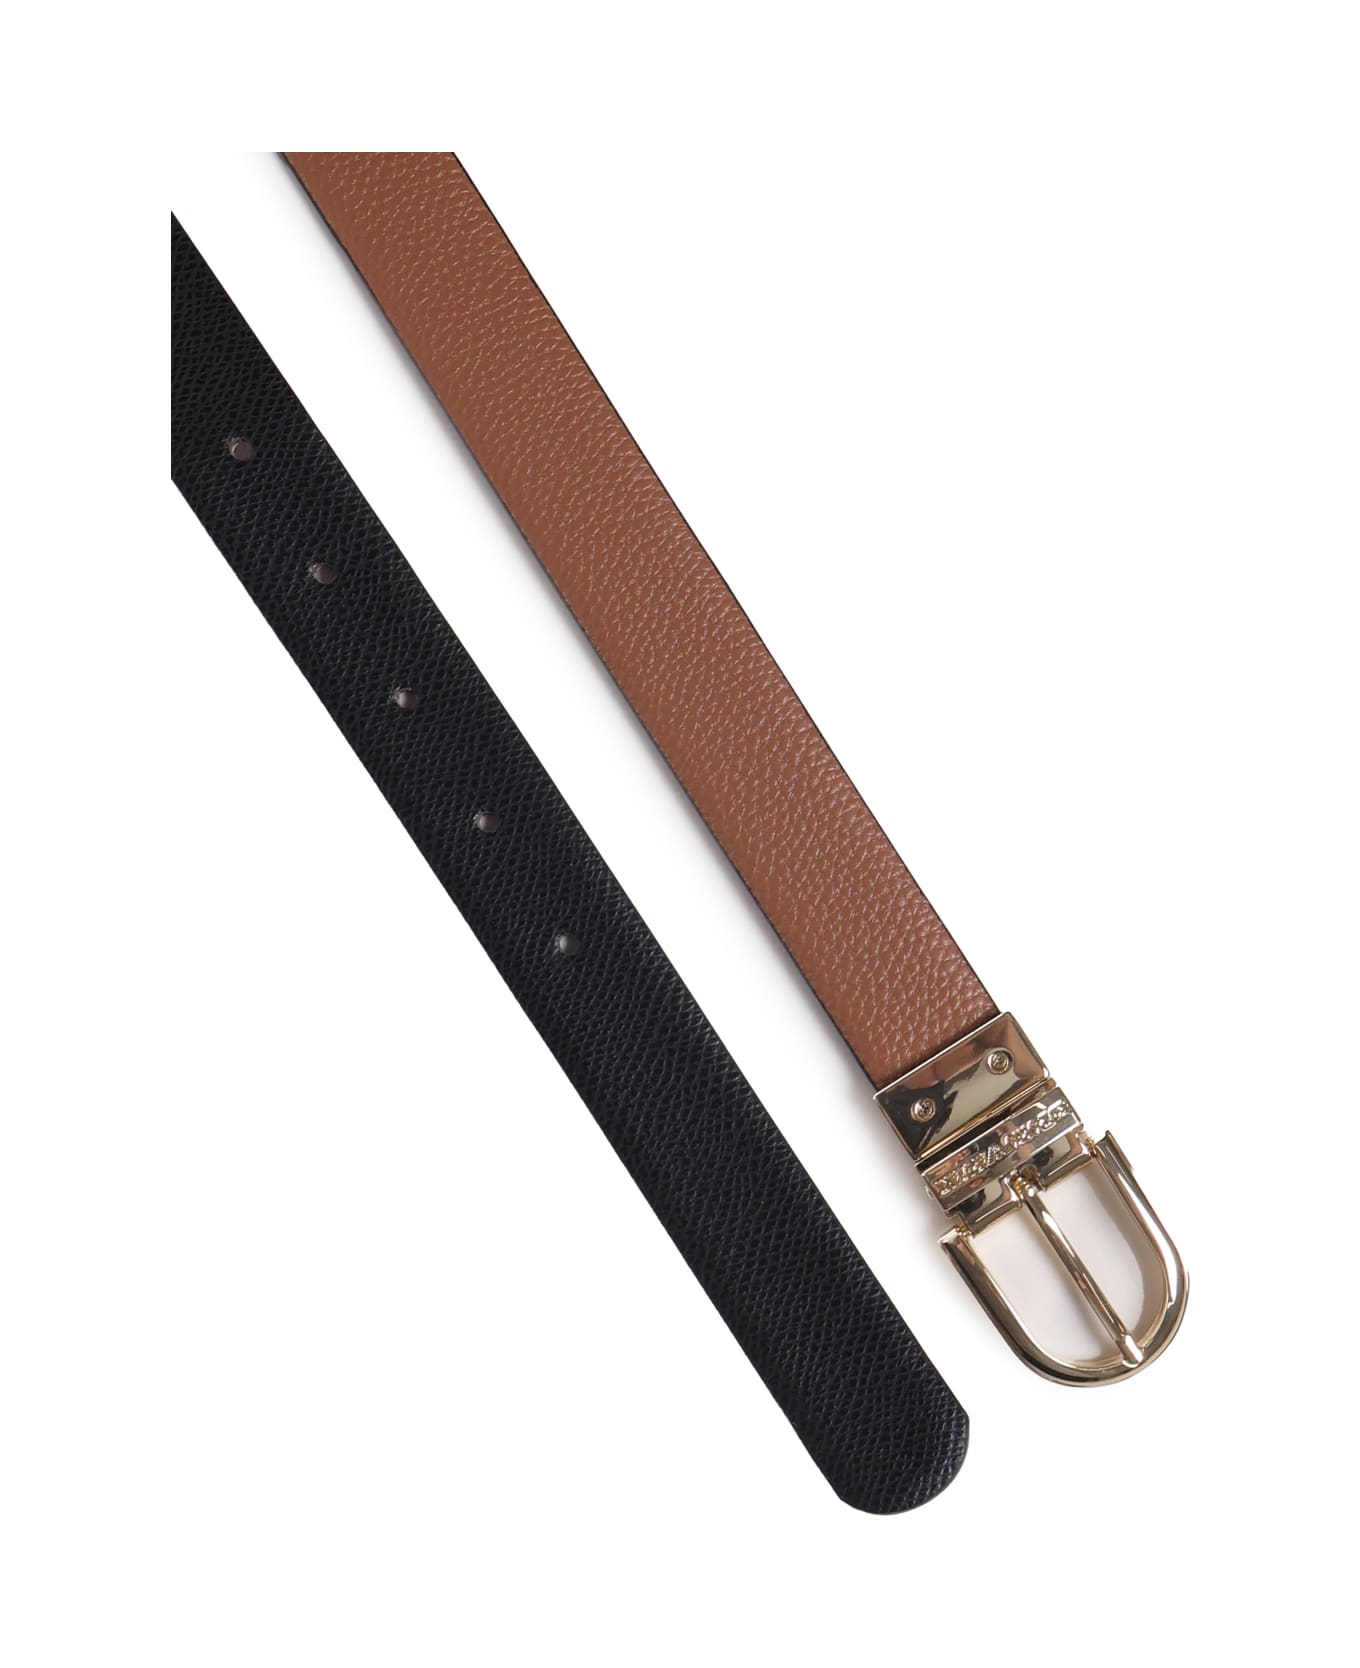 Emporio Armani Leather Belt - Beige